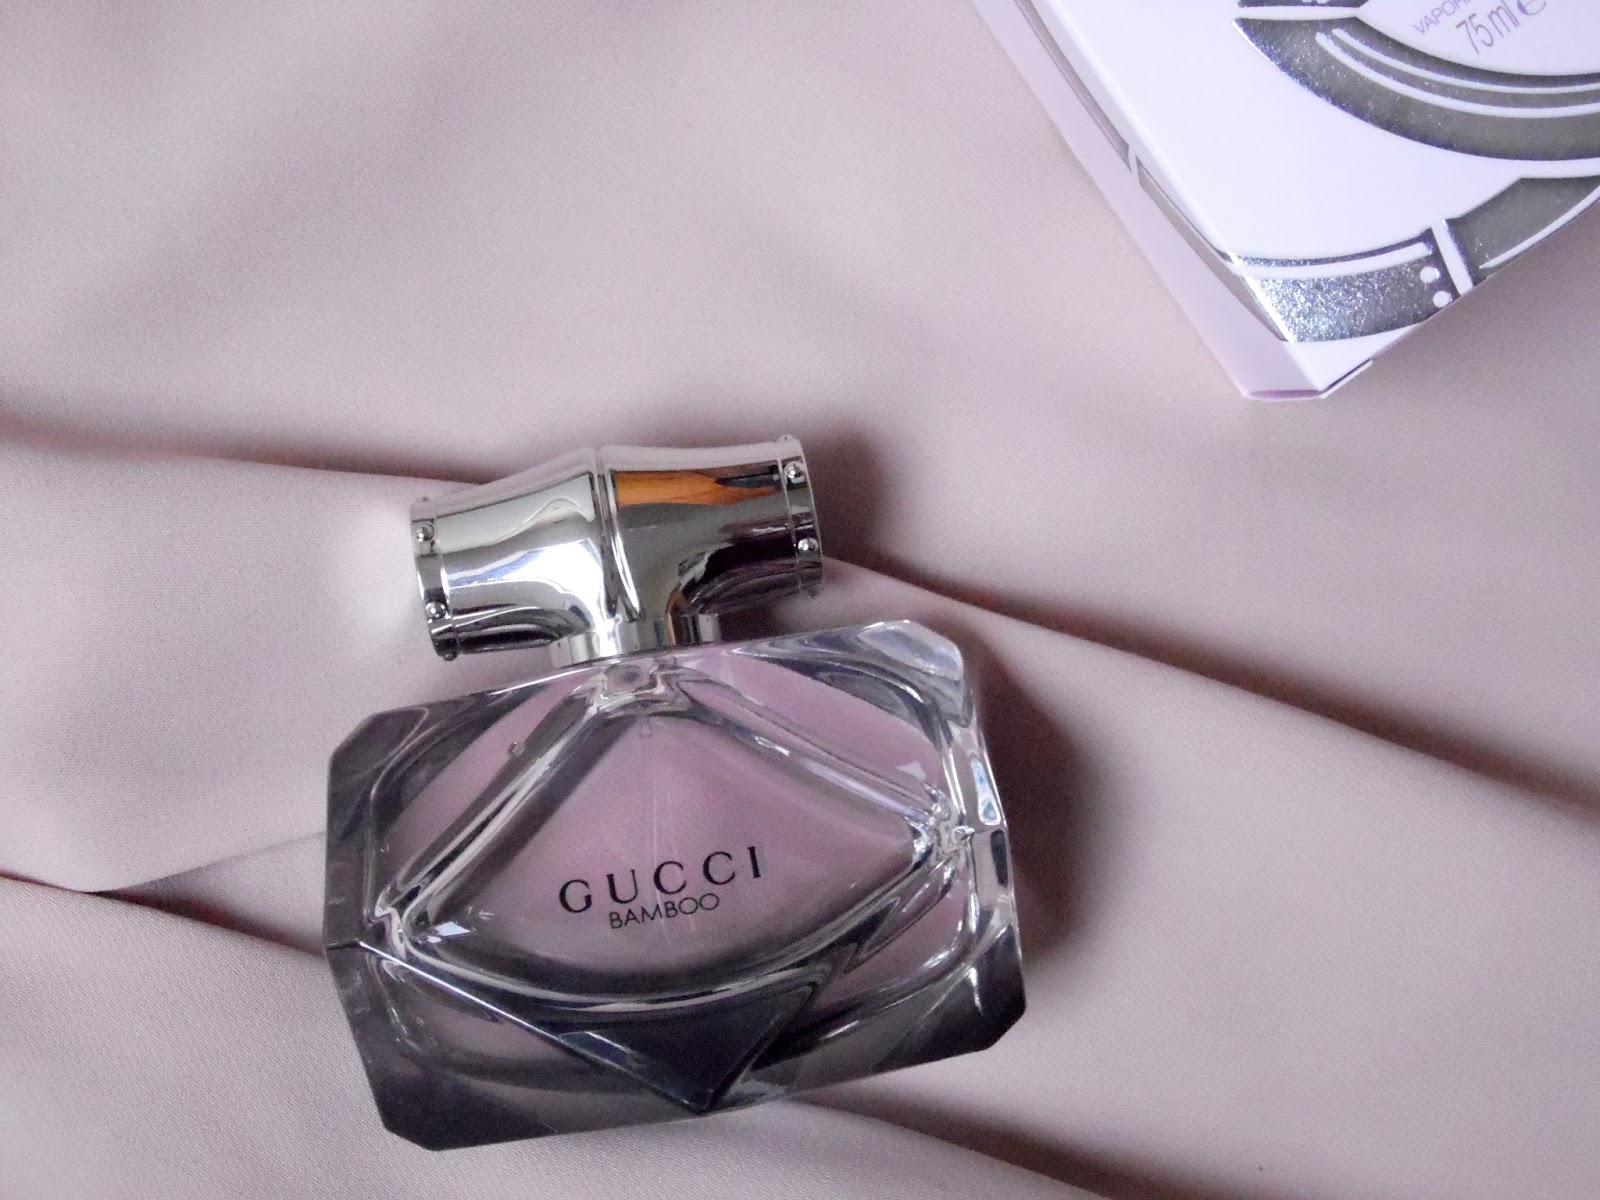 Gucci Bamboo Perfume Review